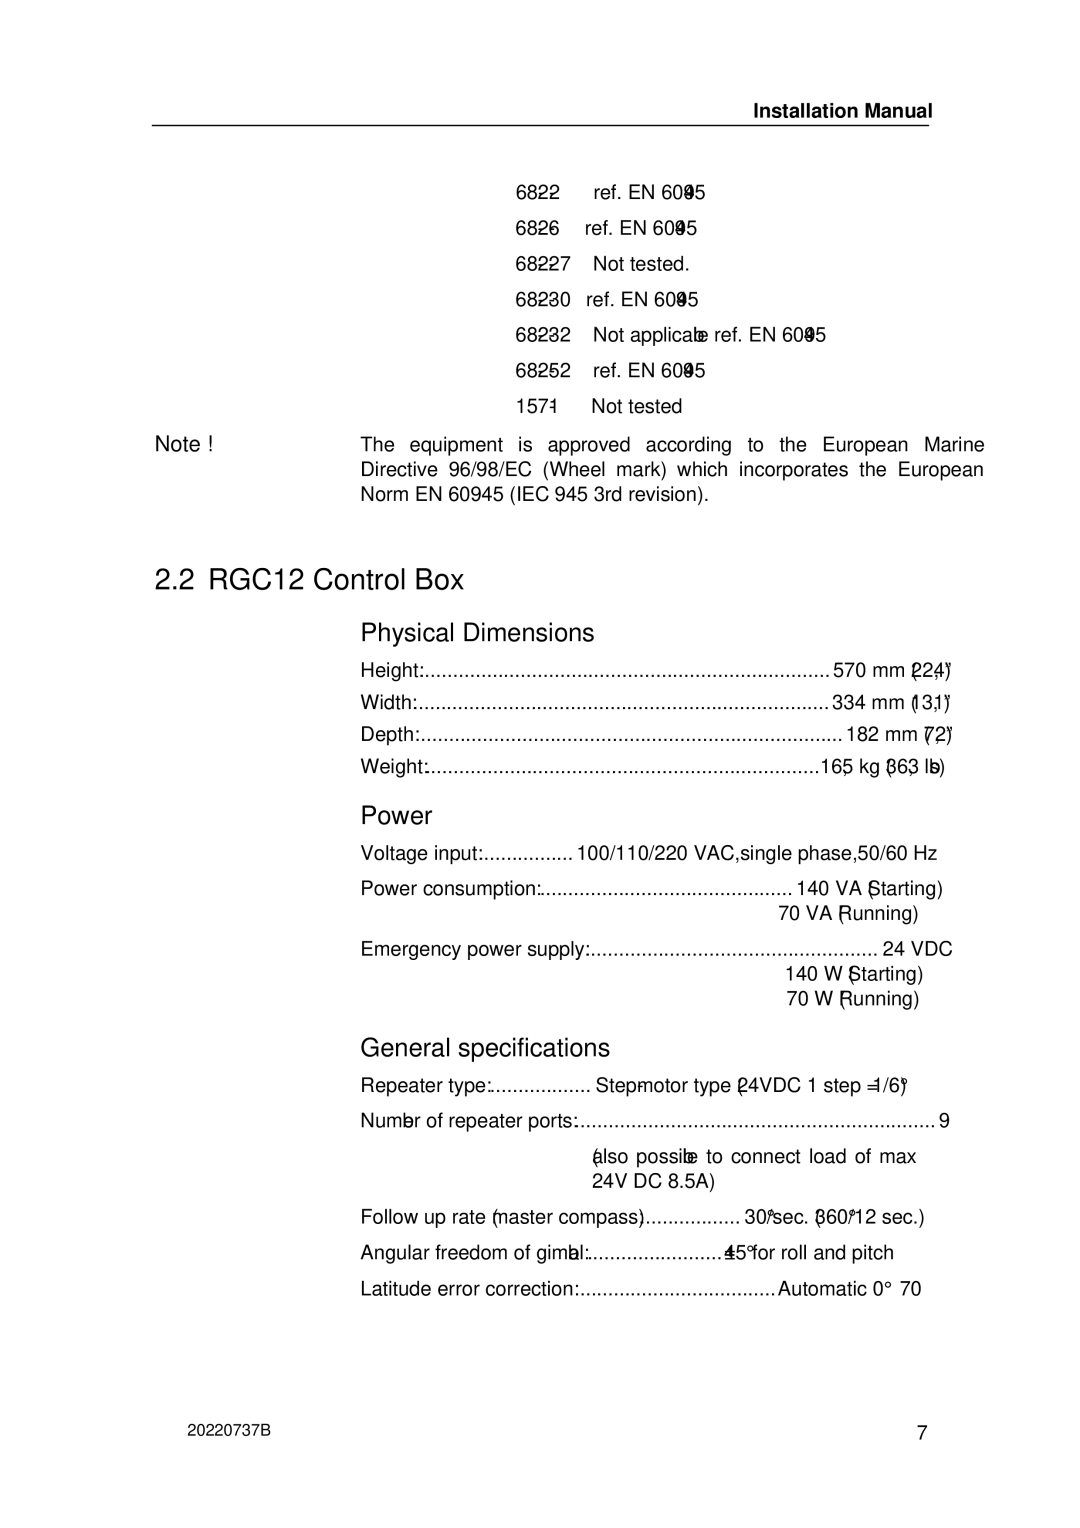 Simrad manual RGC12 Control Box, General specifications 